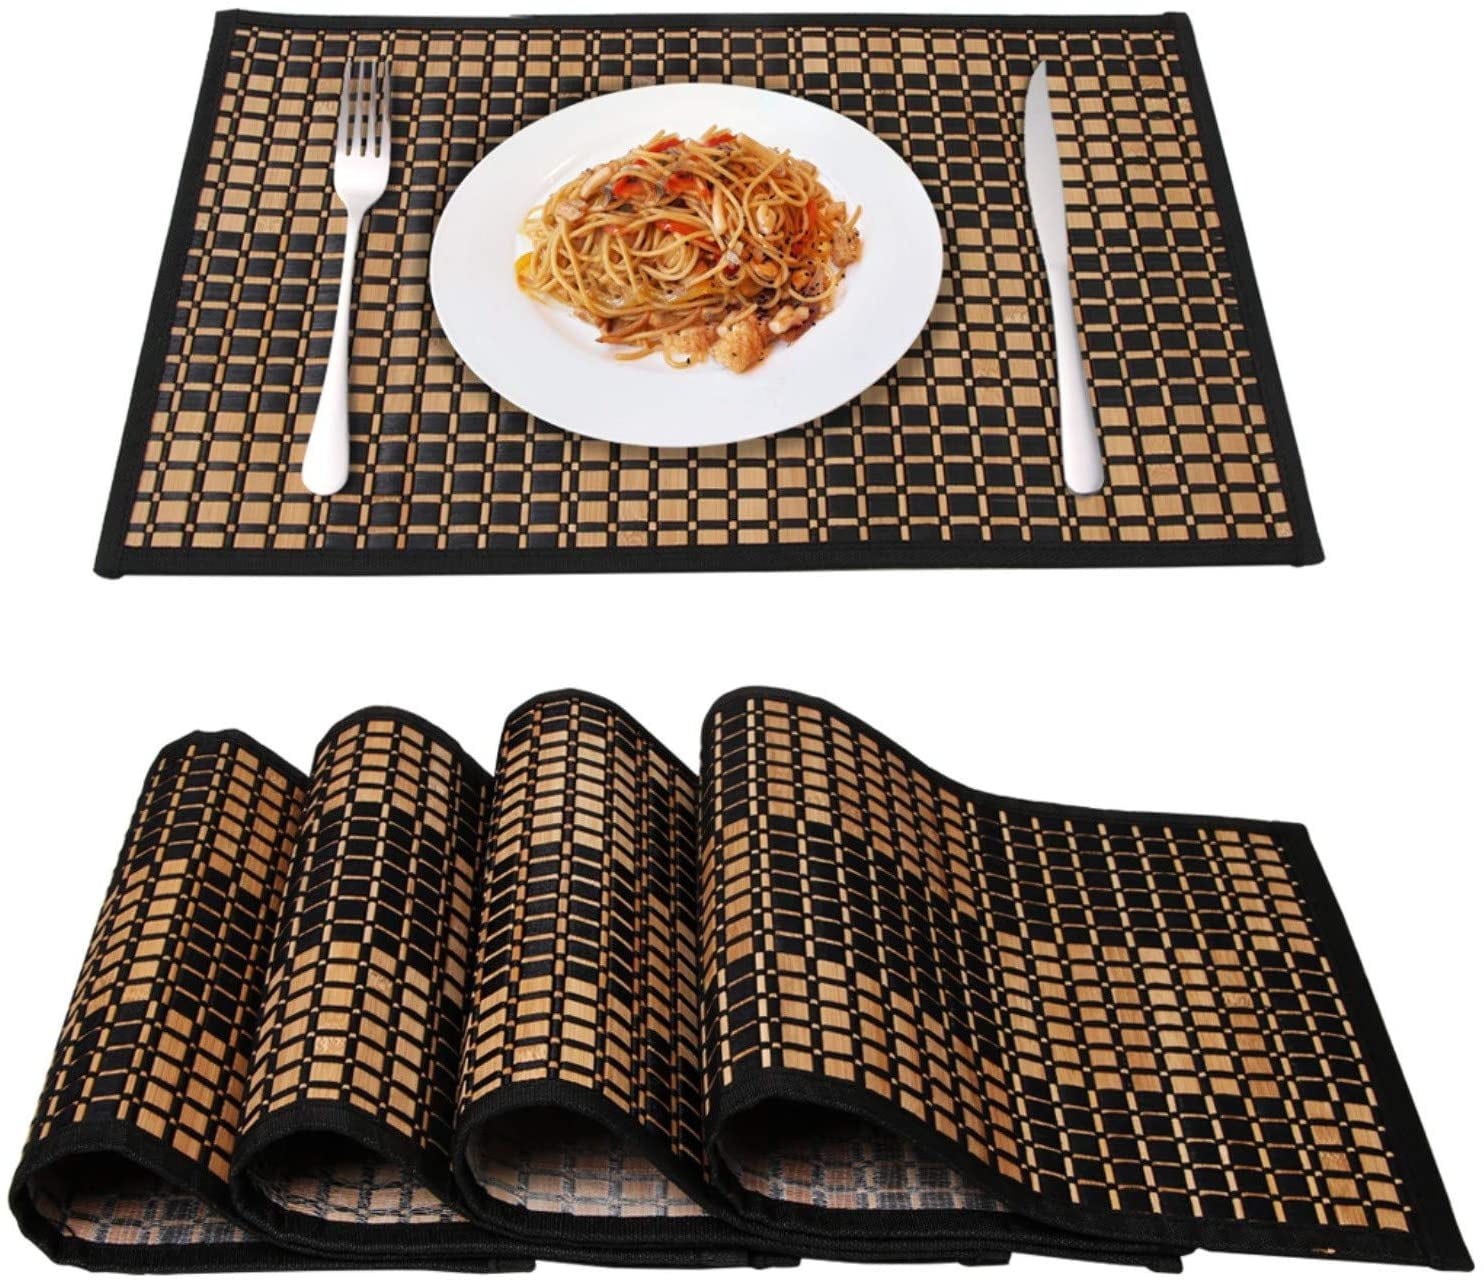 Limei Silicone Trivet Pot Mat for Countertop Trivest Pads Heat Resistant Table Placemats Kitchen Silicone Heat Resistant Table Mat Non-Slip Pot Pan